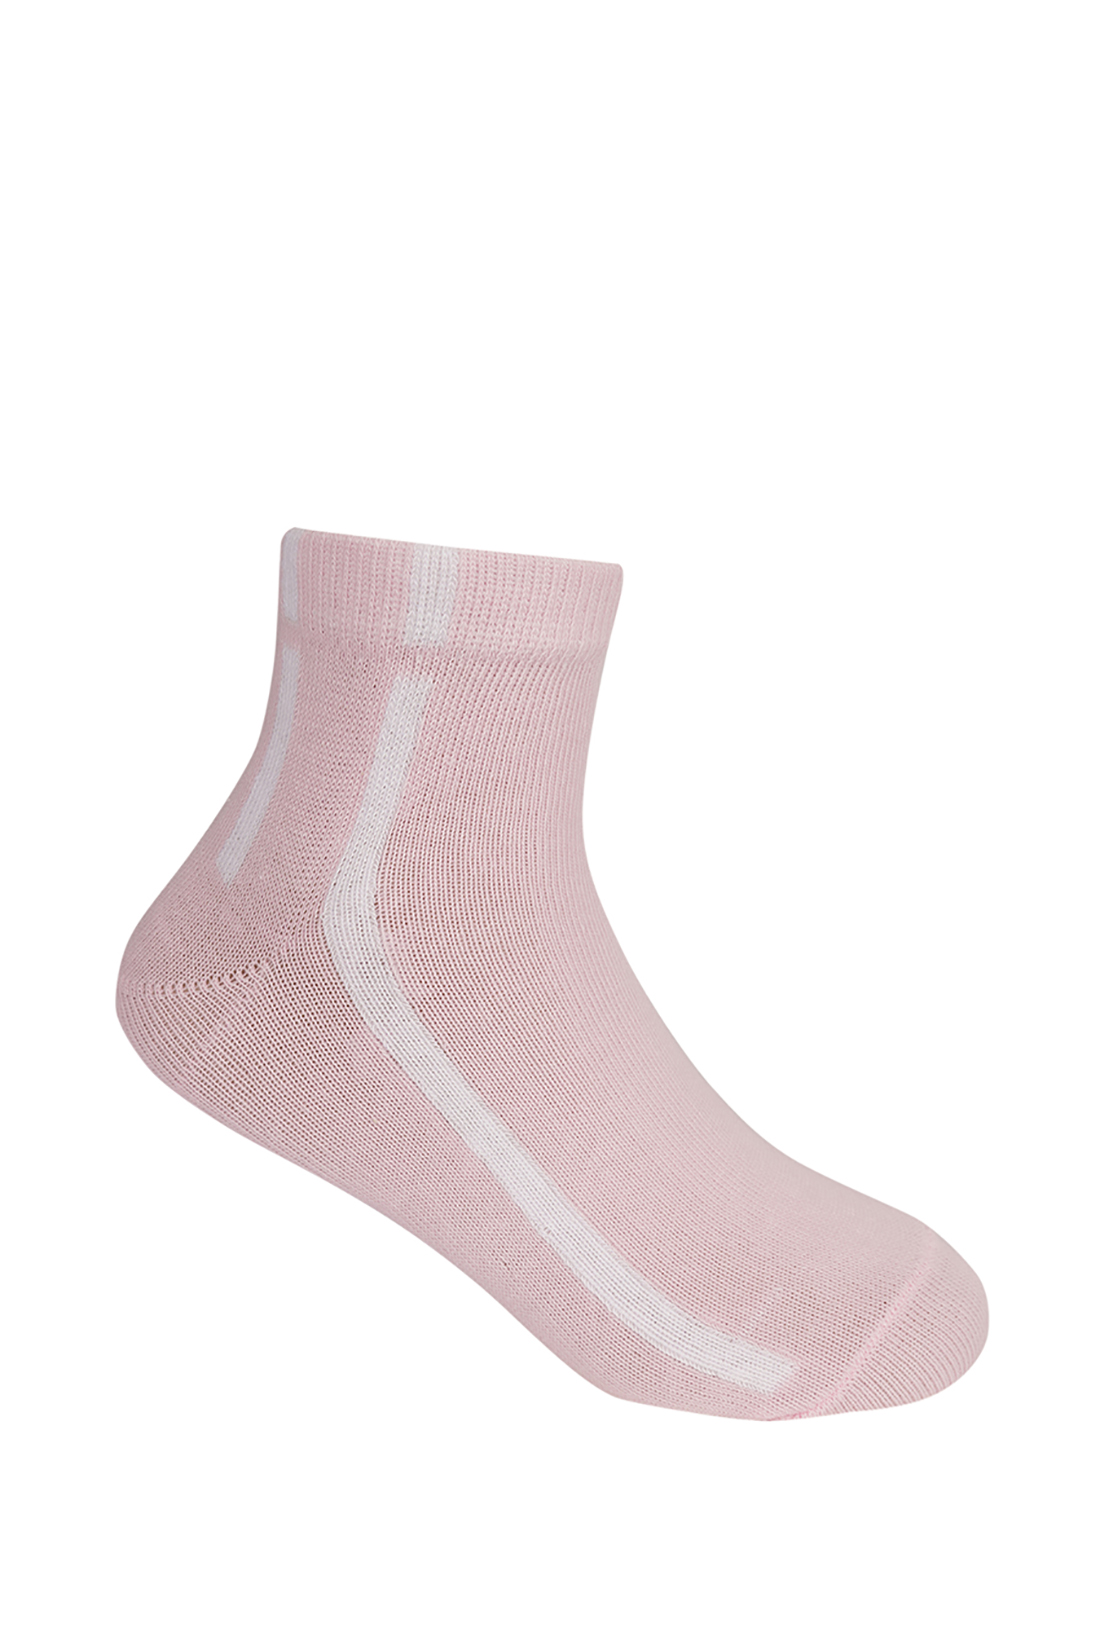 Носки для девочки (арт. baon BK390007), размер 29/31, цвет розовый Носки для девочки (арт. baon BK390007) - фото 1